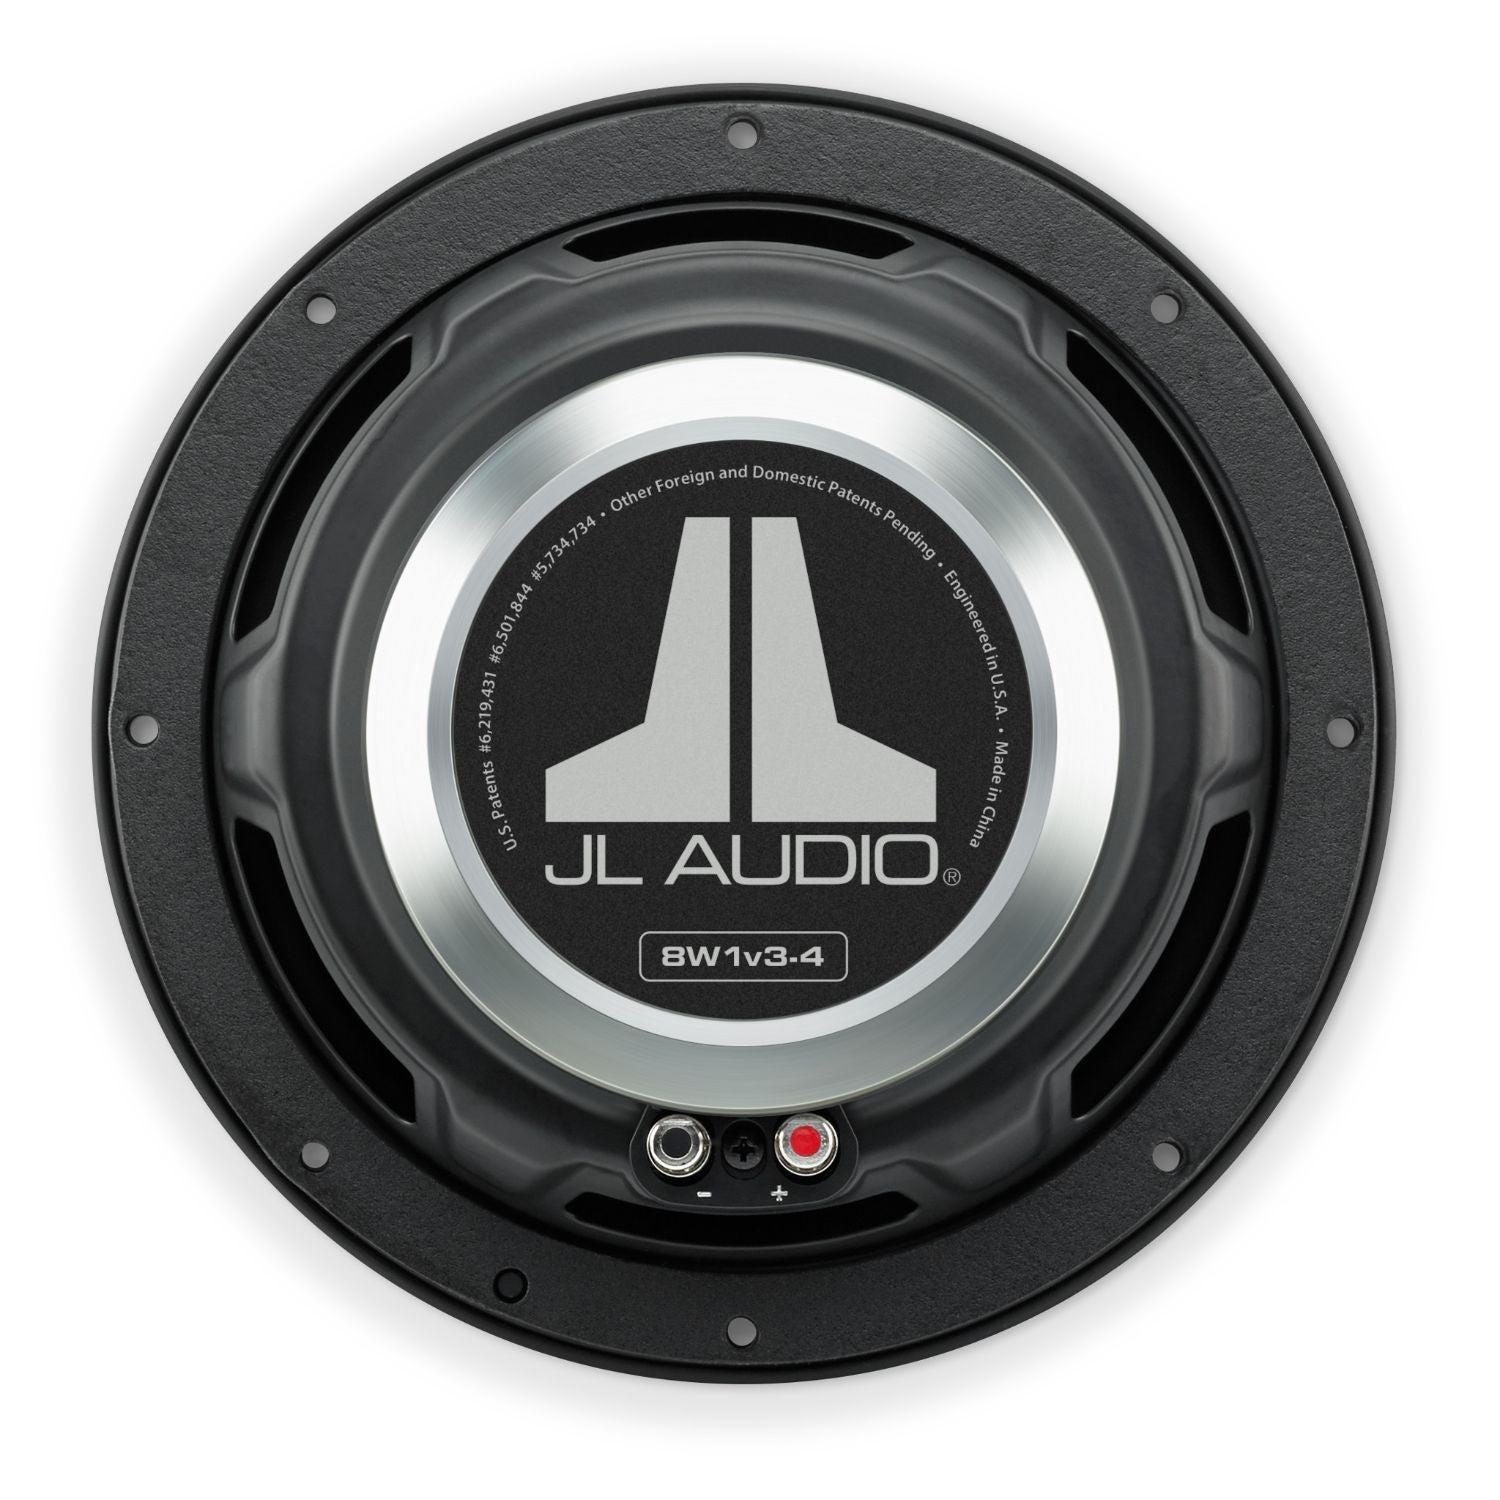 JL Audio 8W1v3-4 8-inch subwoofer driver (150W, 4 ohm)